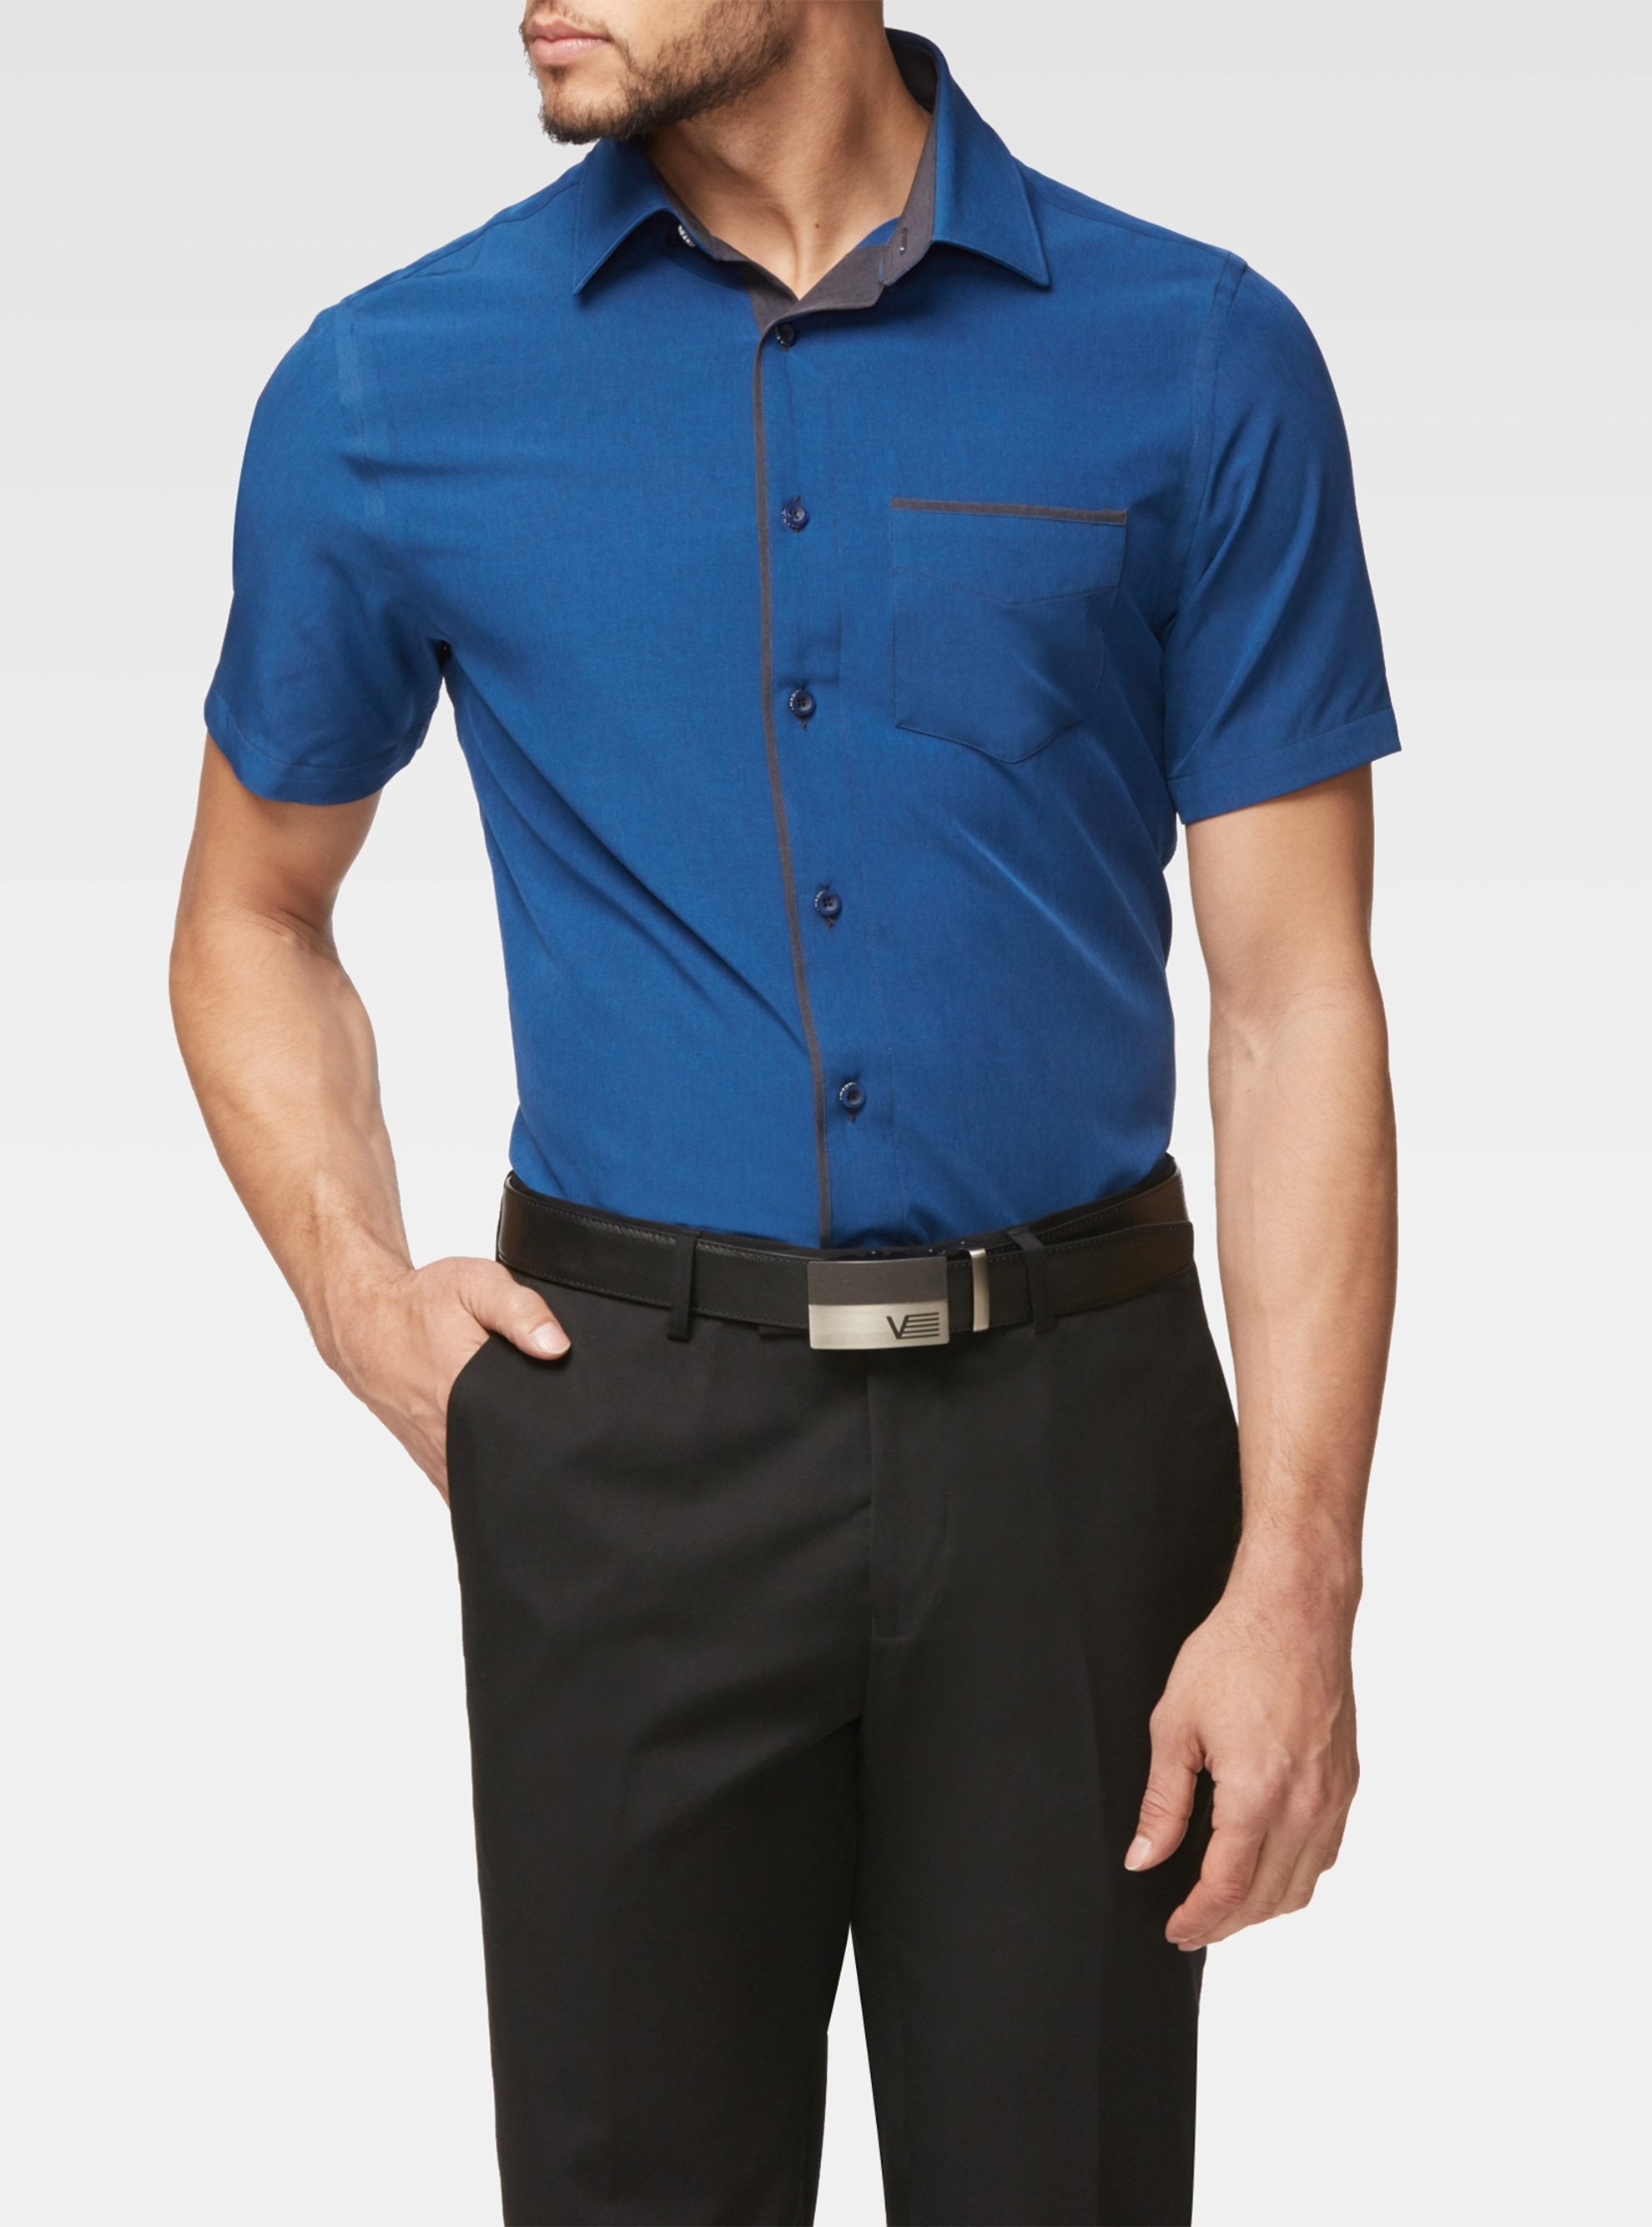 Navy stretch short-sleeved shirt